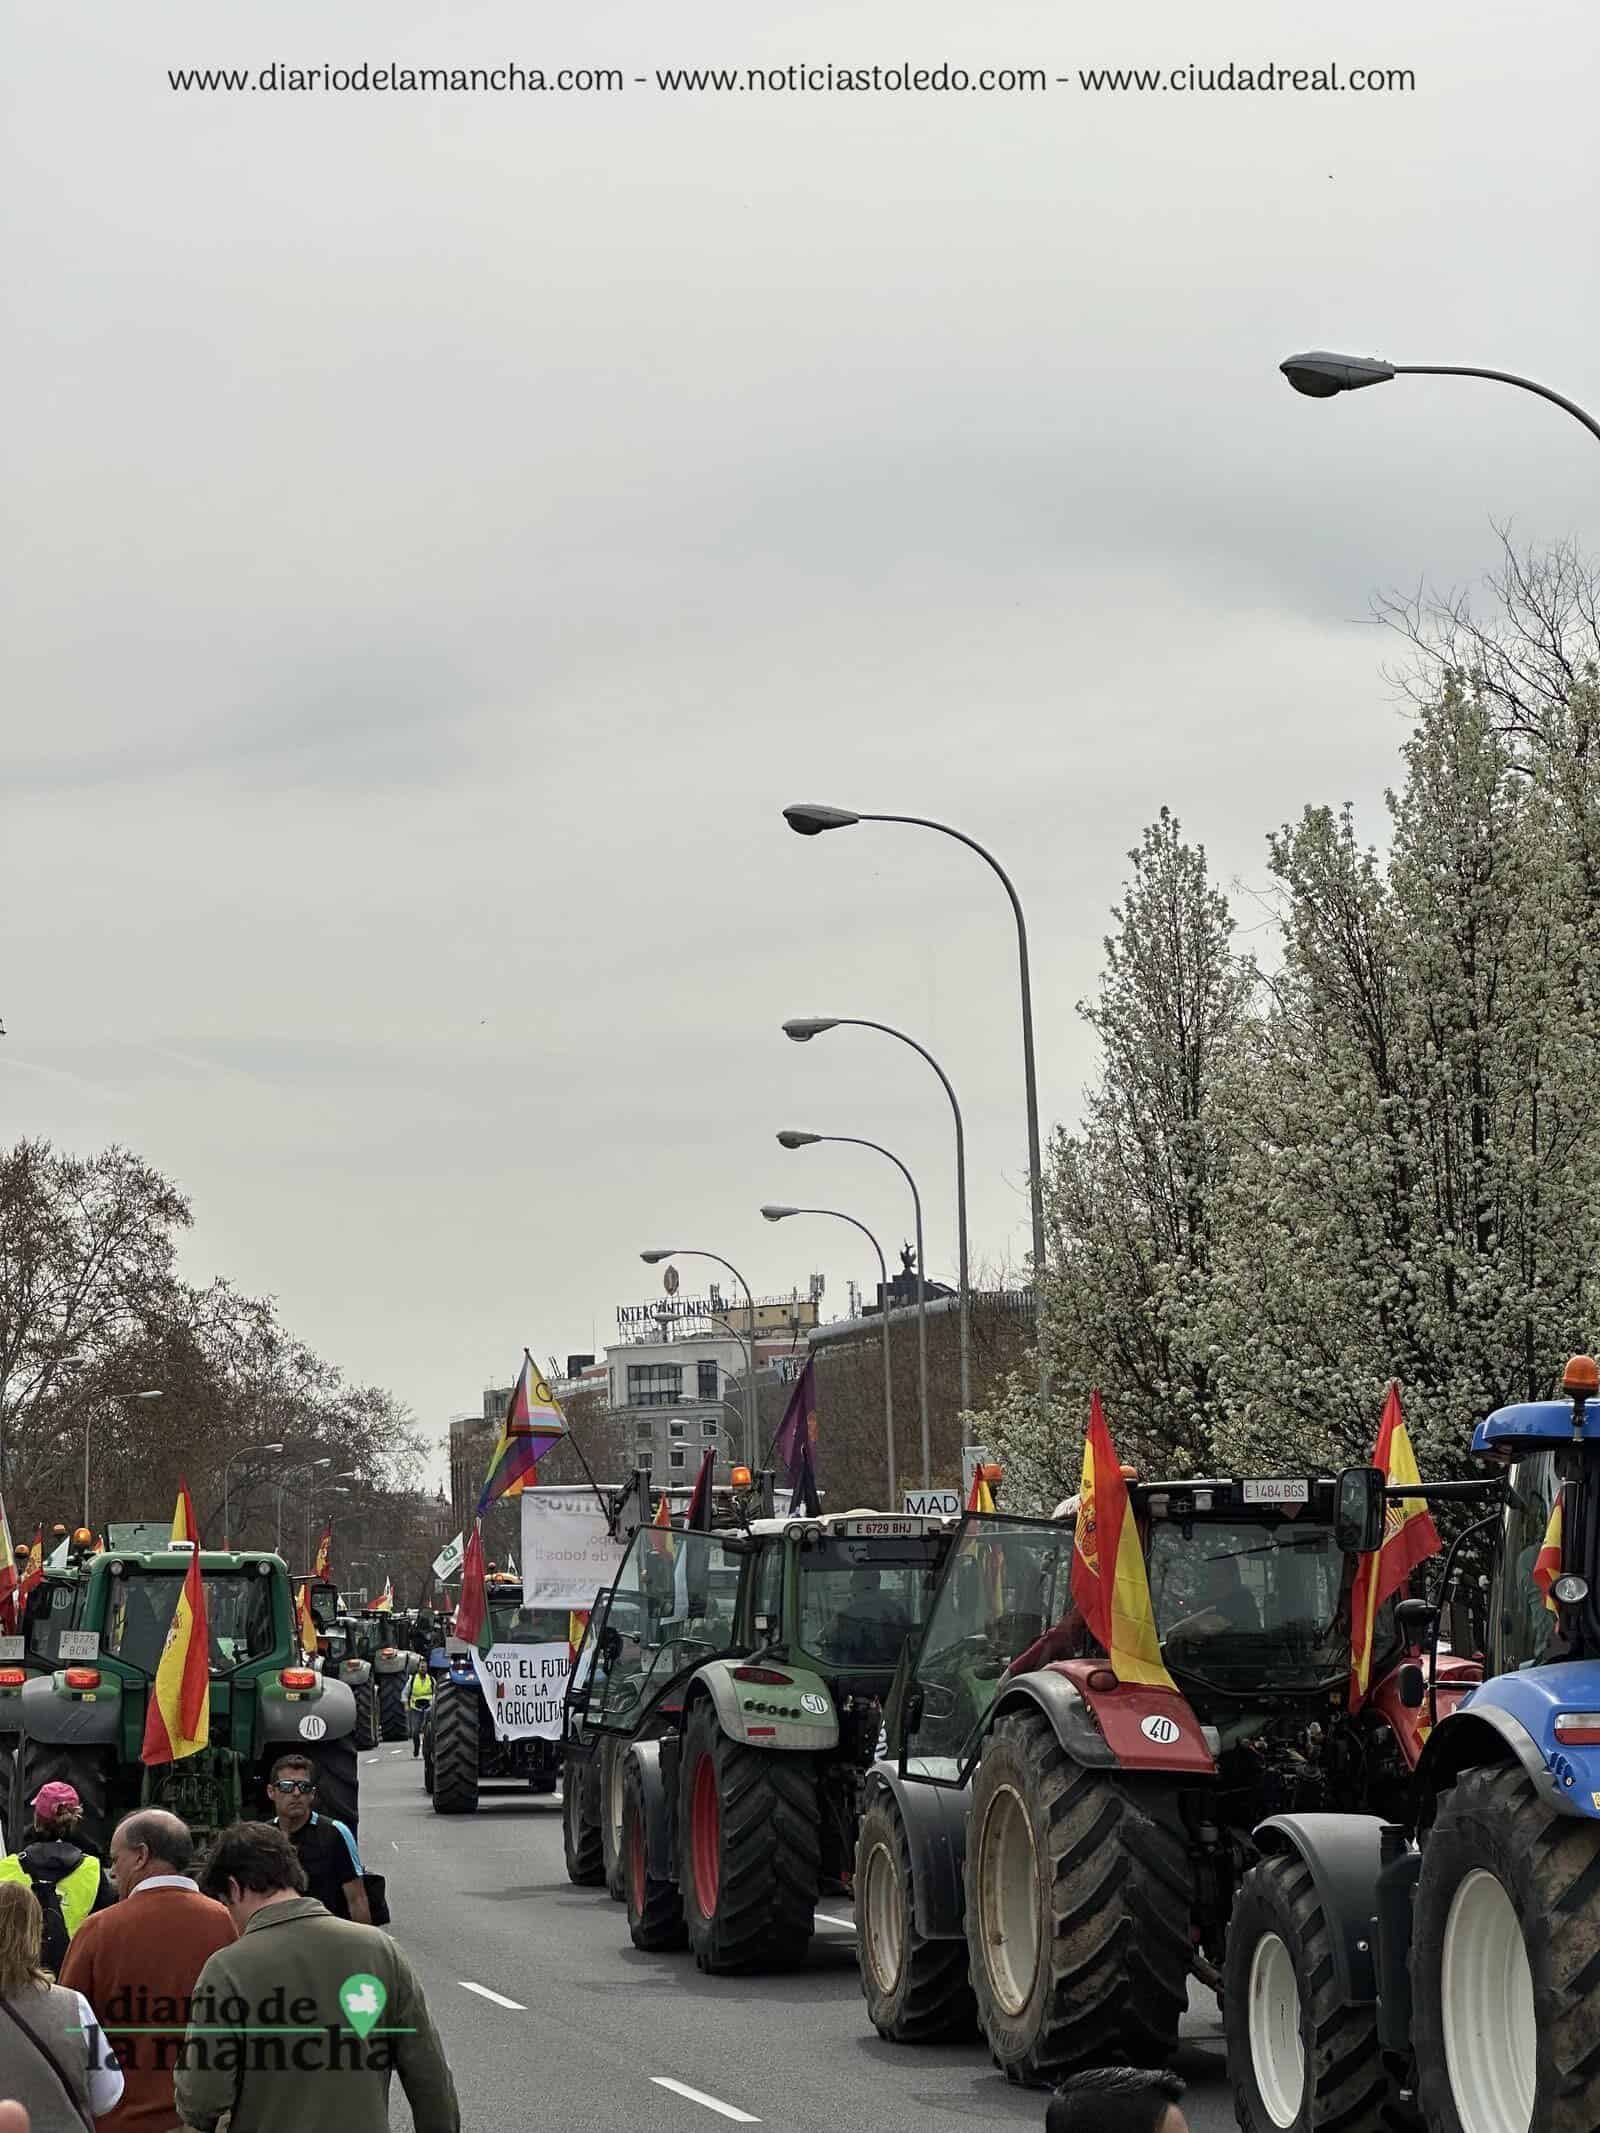 España se Moviliza: La protesta de tractores que recorrió la capital 95